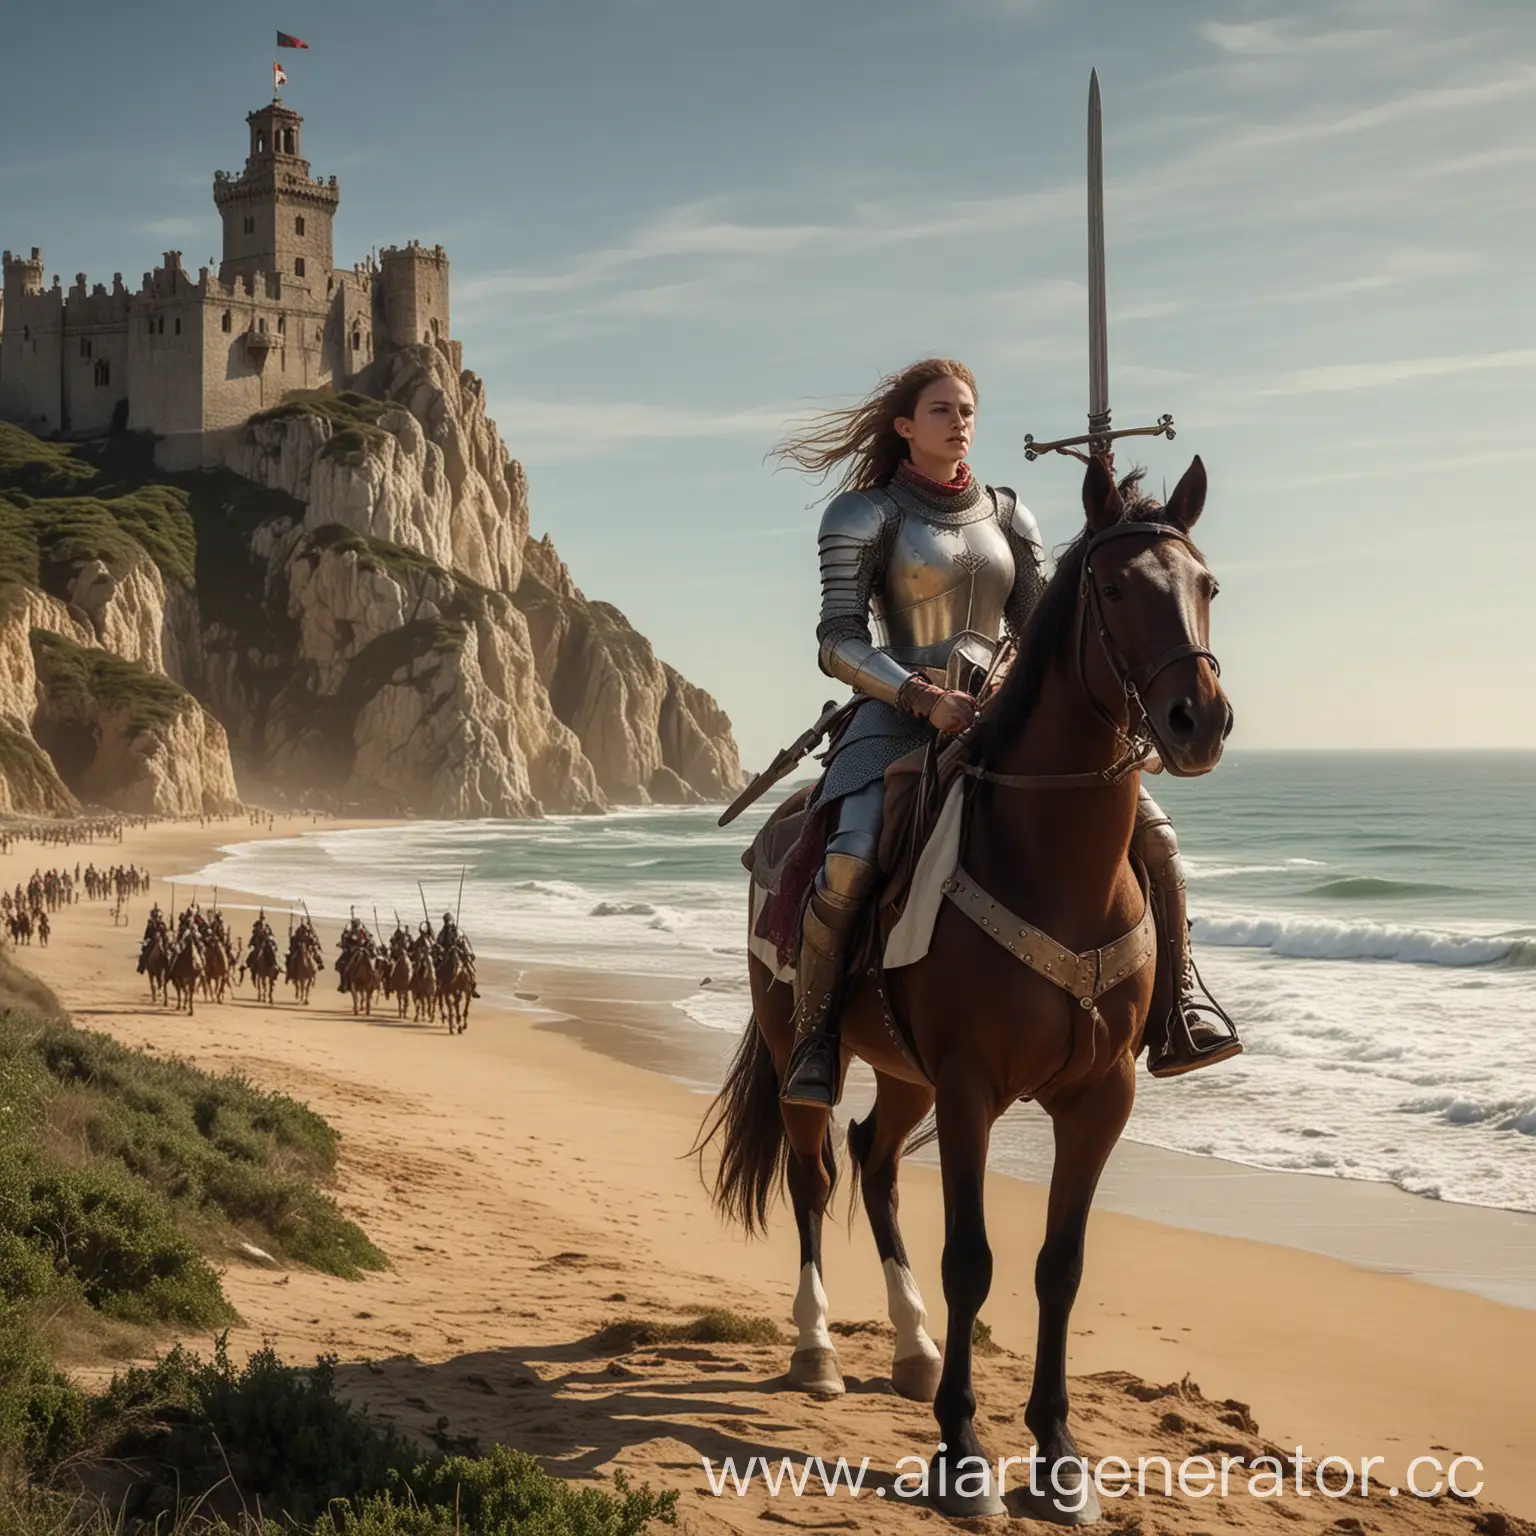 Knight-Girl-Leading-Troops-into-Battle-at-Cabo-da-Roca-Castle